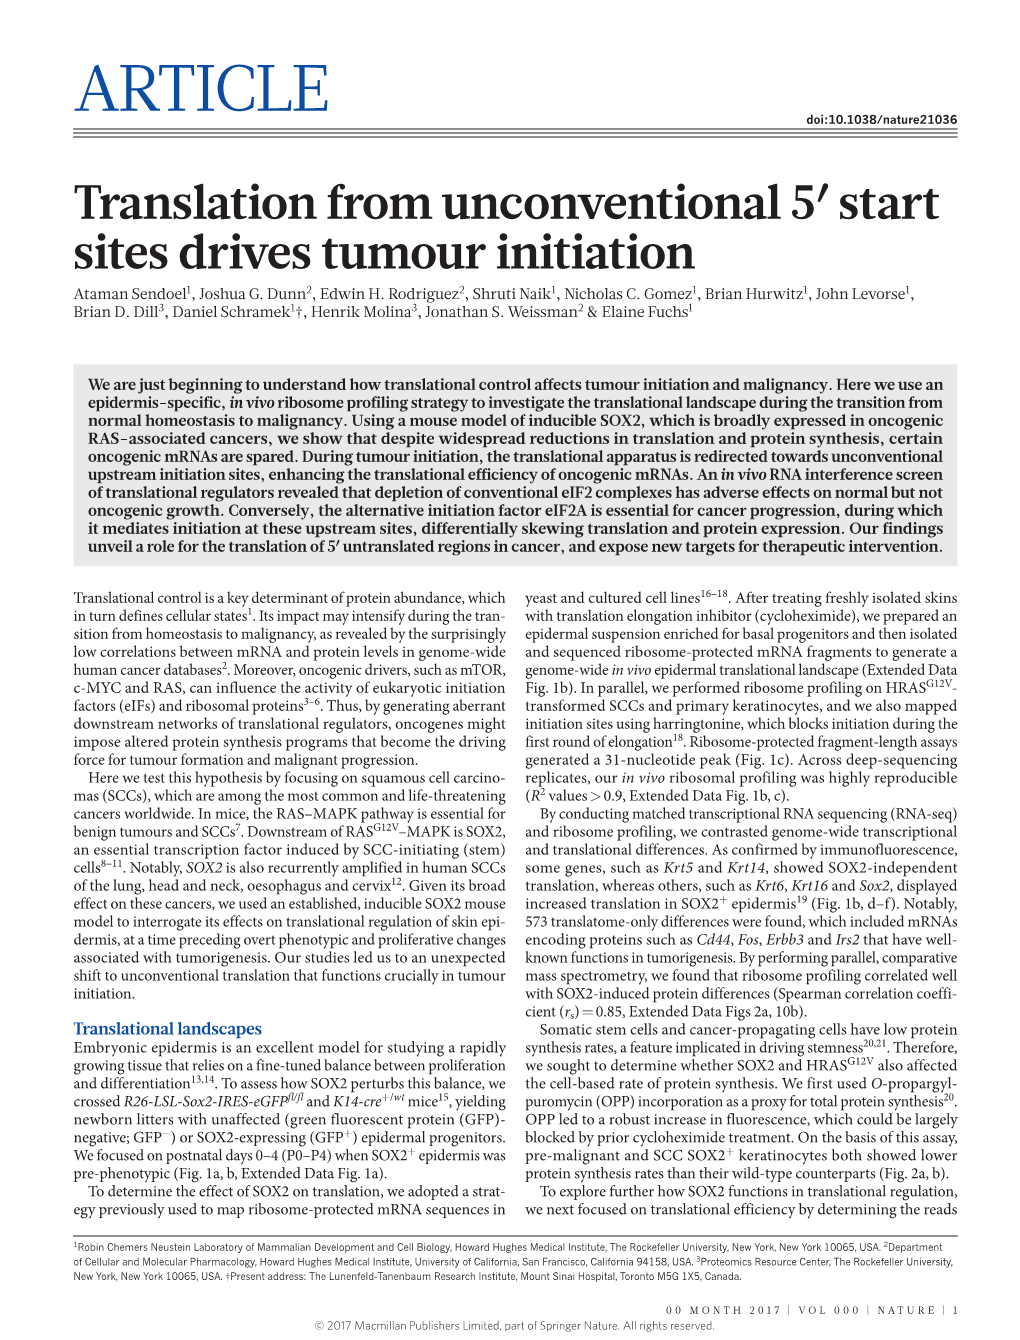 Translation from Unconventional 5′ Start Sites Drives Tumour Initiation Ataman Sendoel1, Joshua G